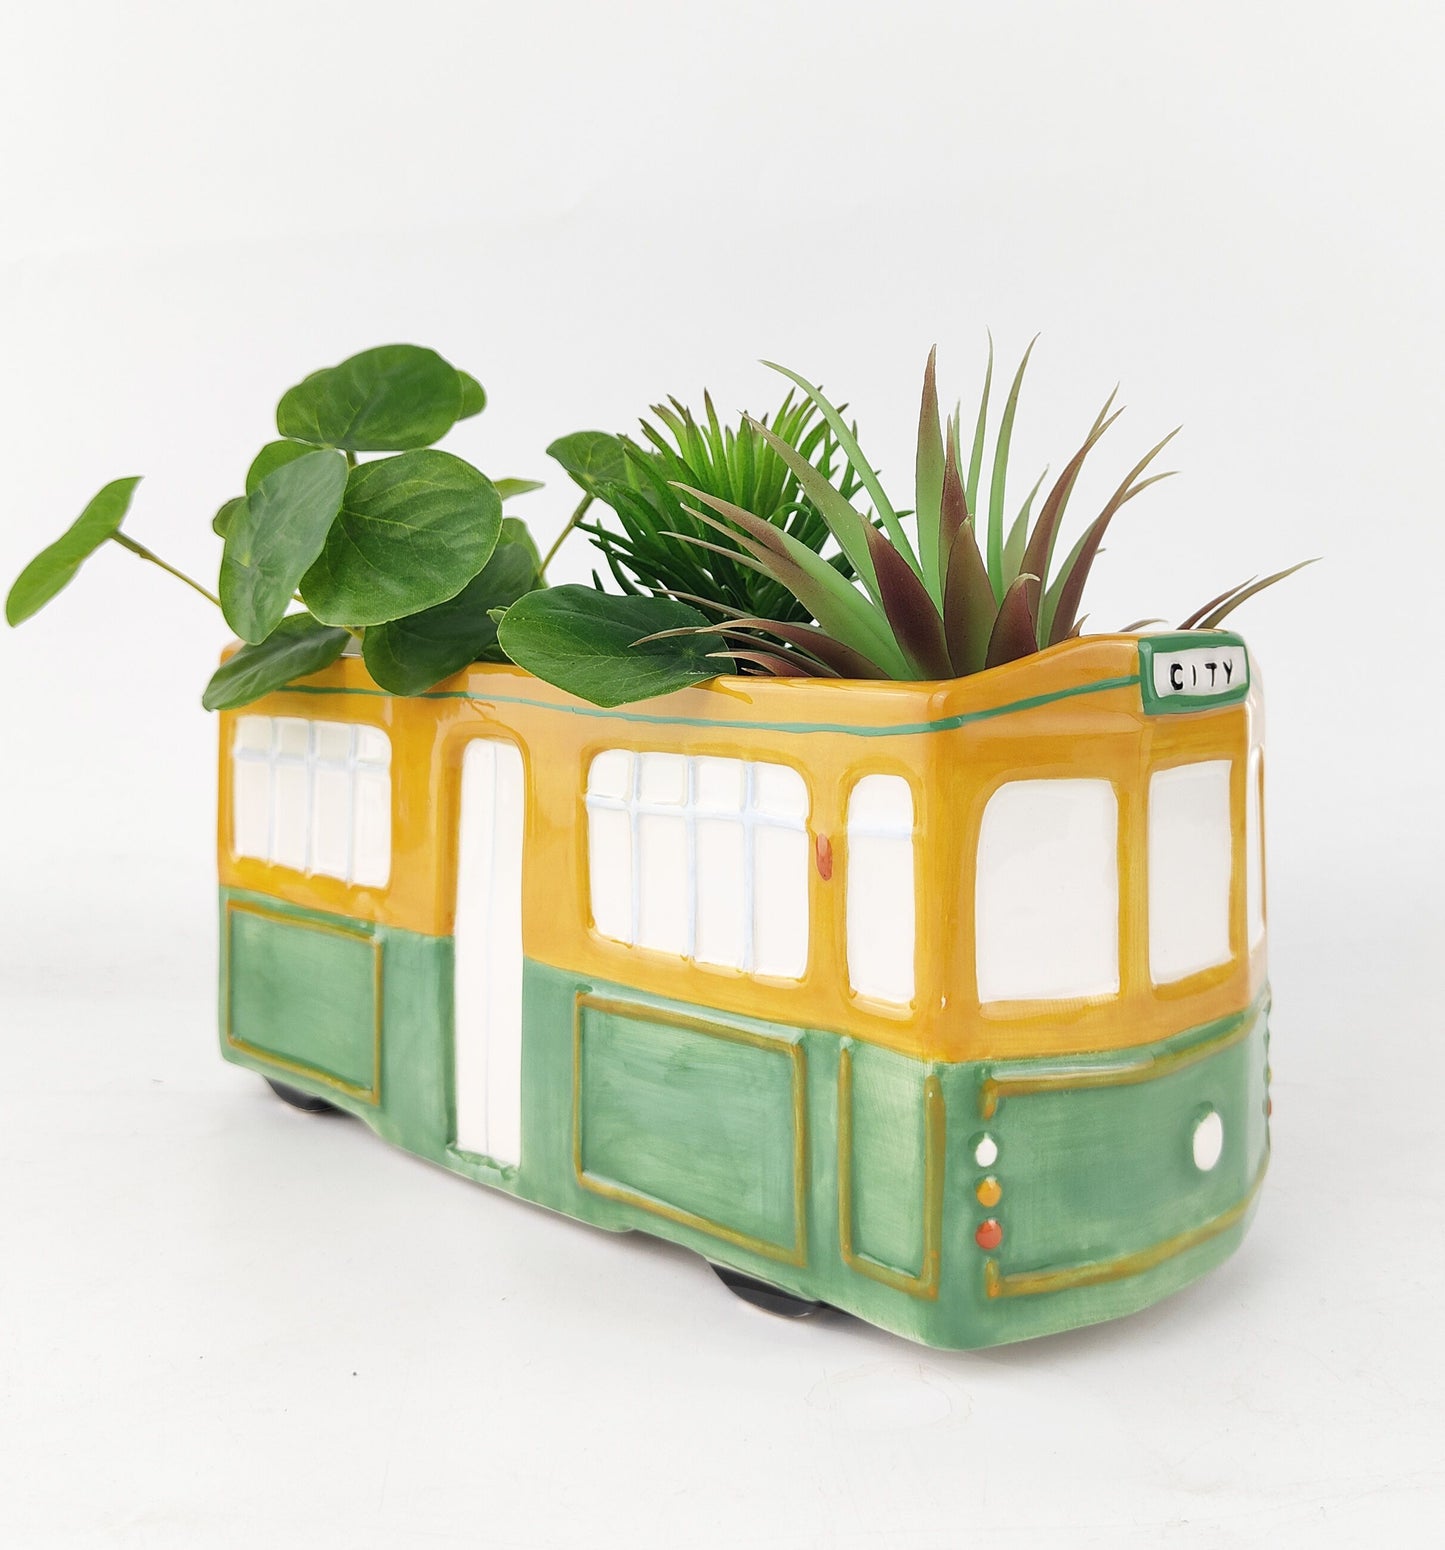 Melbourne tram ceramic vase / planter pot